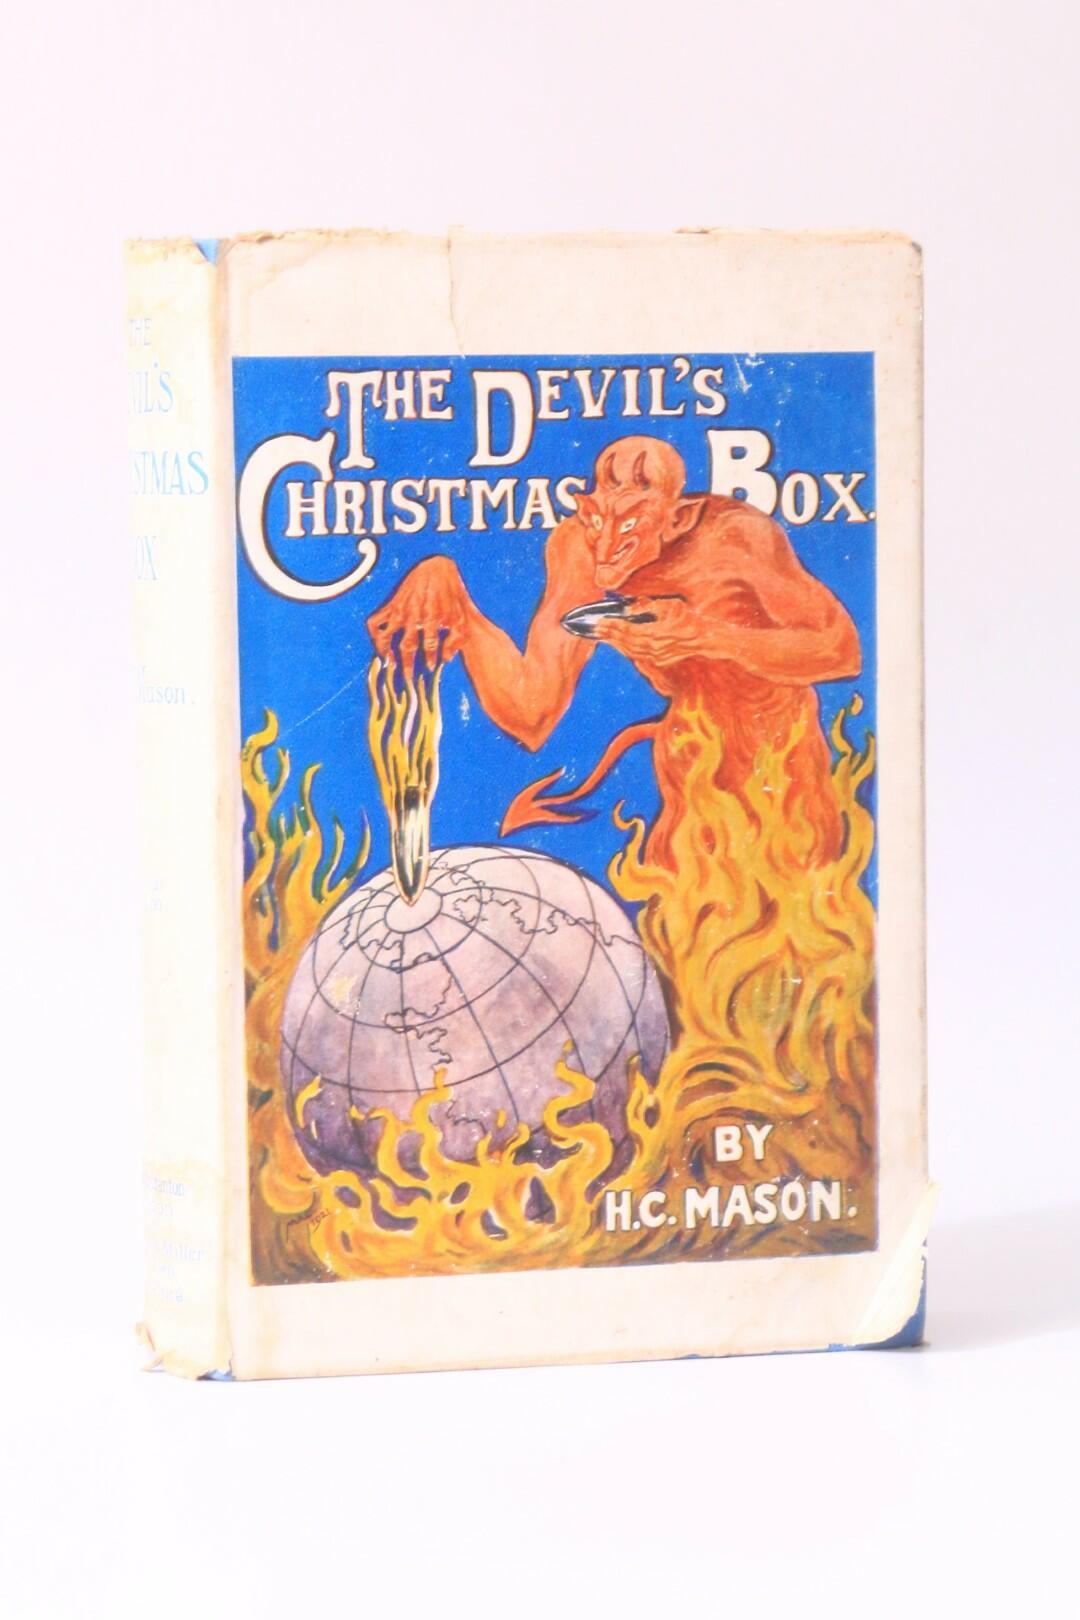 H.C. Mason - The Devil's Christmas Box - Heath Cranton / Maskew Miller, n.d. [1921], First Edition.